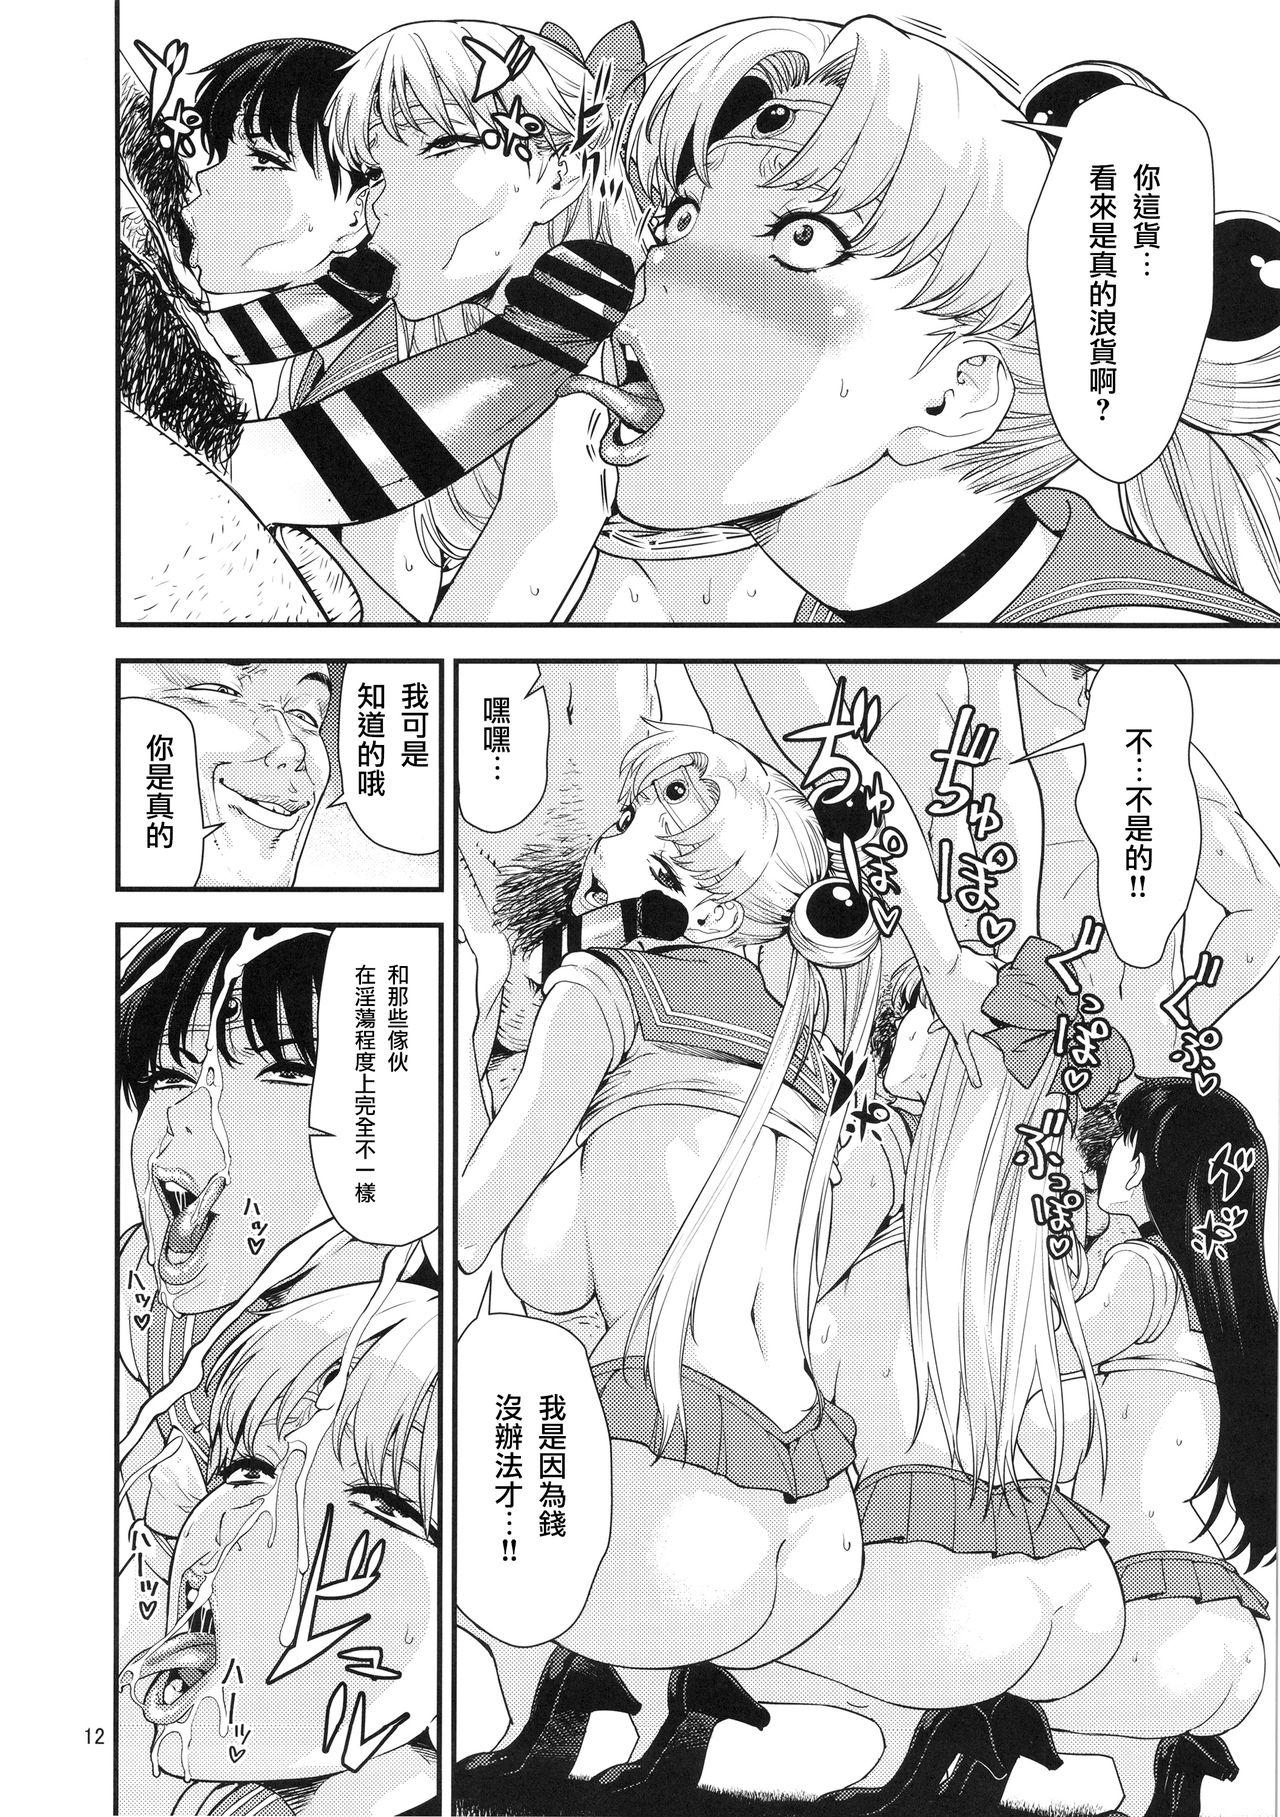 Nasty Sailor Moon - Sailor moon Massages - Page 11